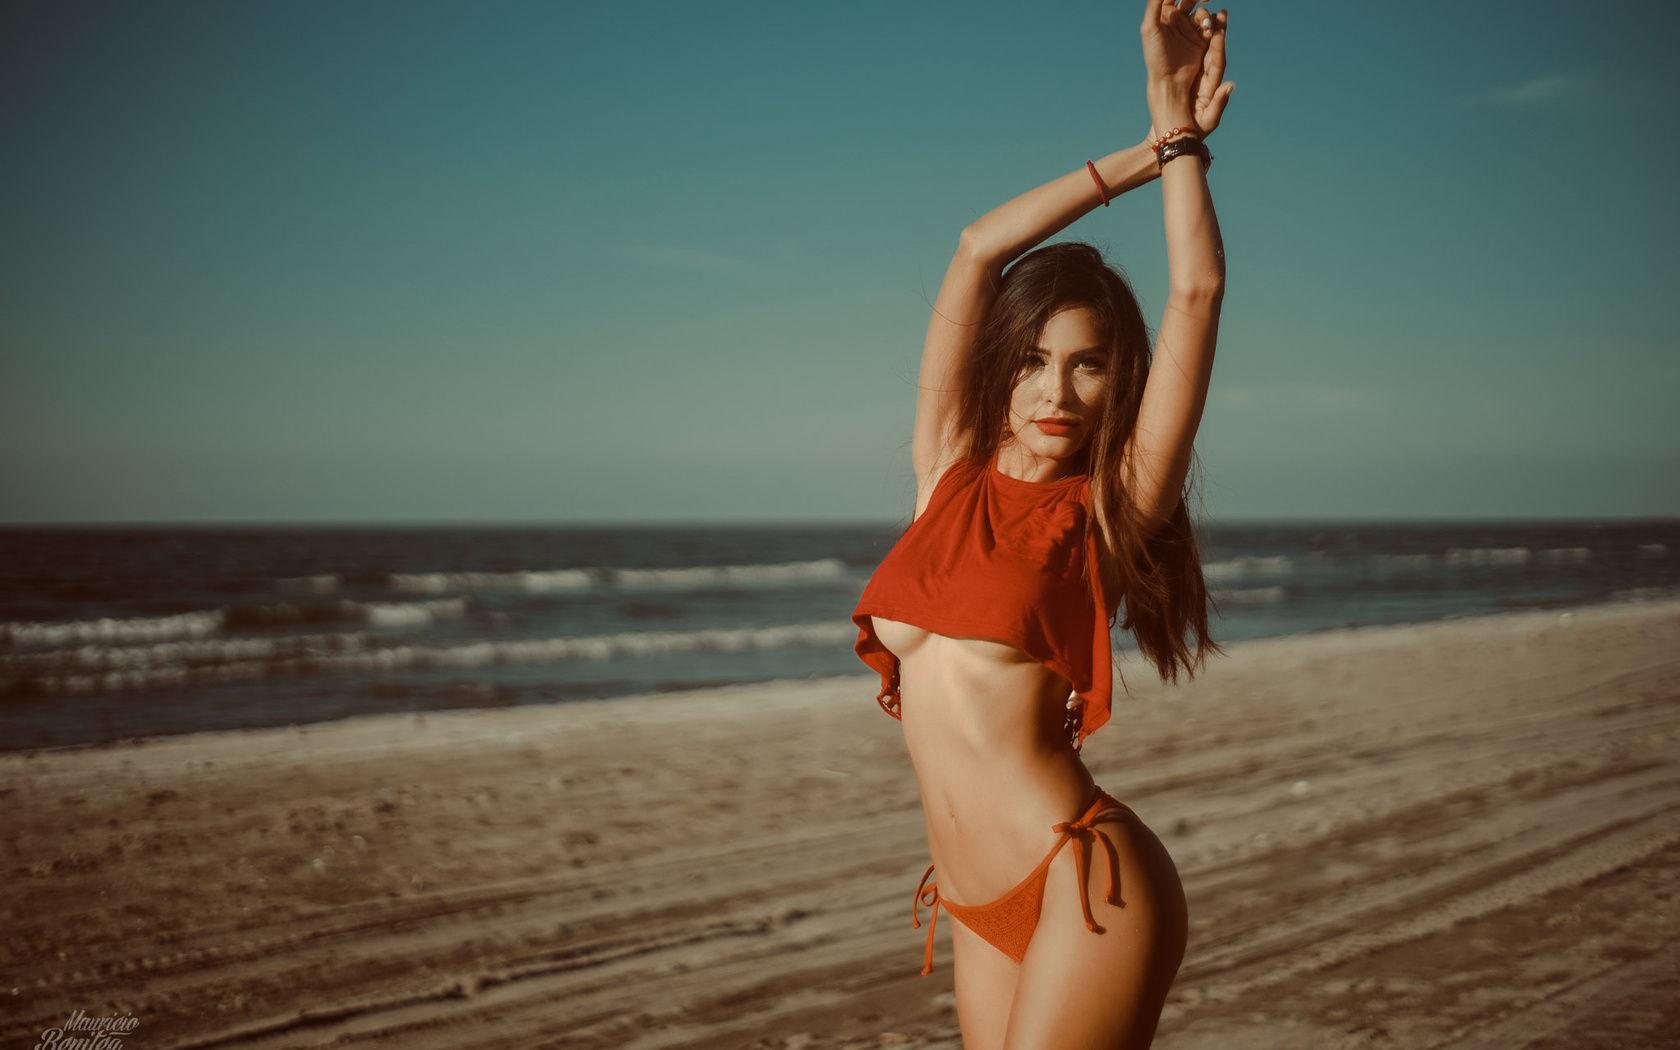 women, sea, beach, sand, women outdoors, belly, arms up, underboob, boobs, white nails, swimwear, red bikini, red lipstick